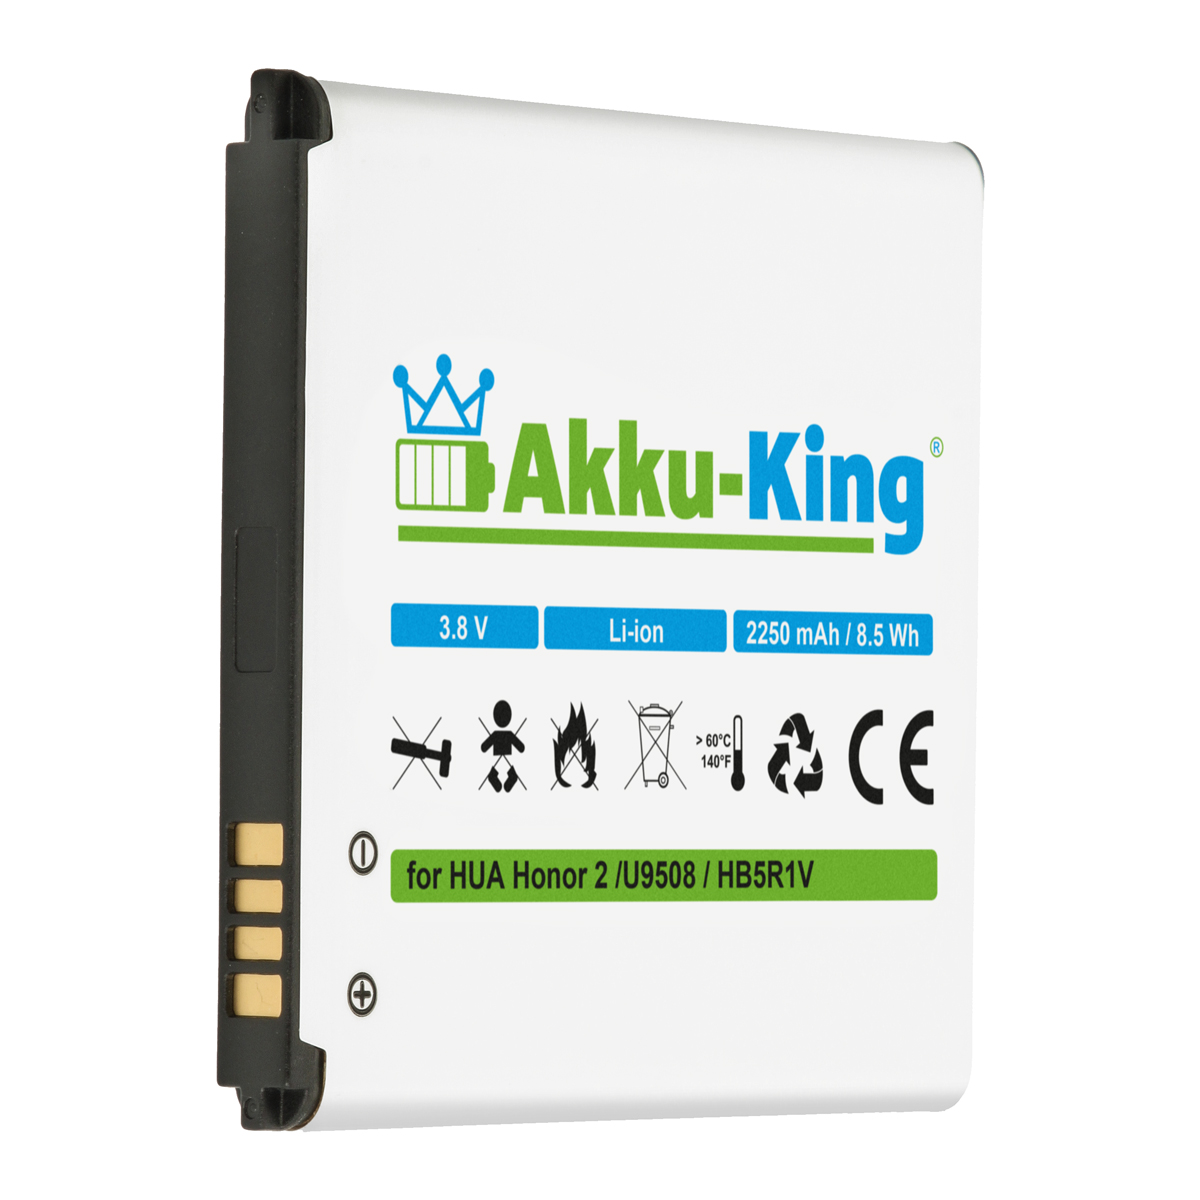 2250mAh Handy-Akku, HB5R1V Akku Li-Ion Huawei kompatibel mit Volt, 3.7 AKKU-KING